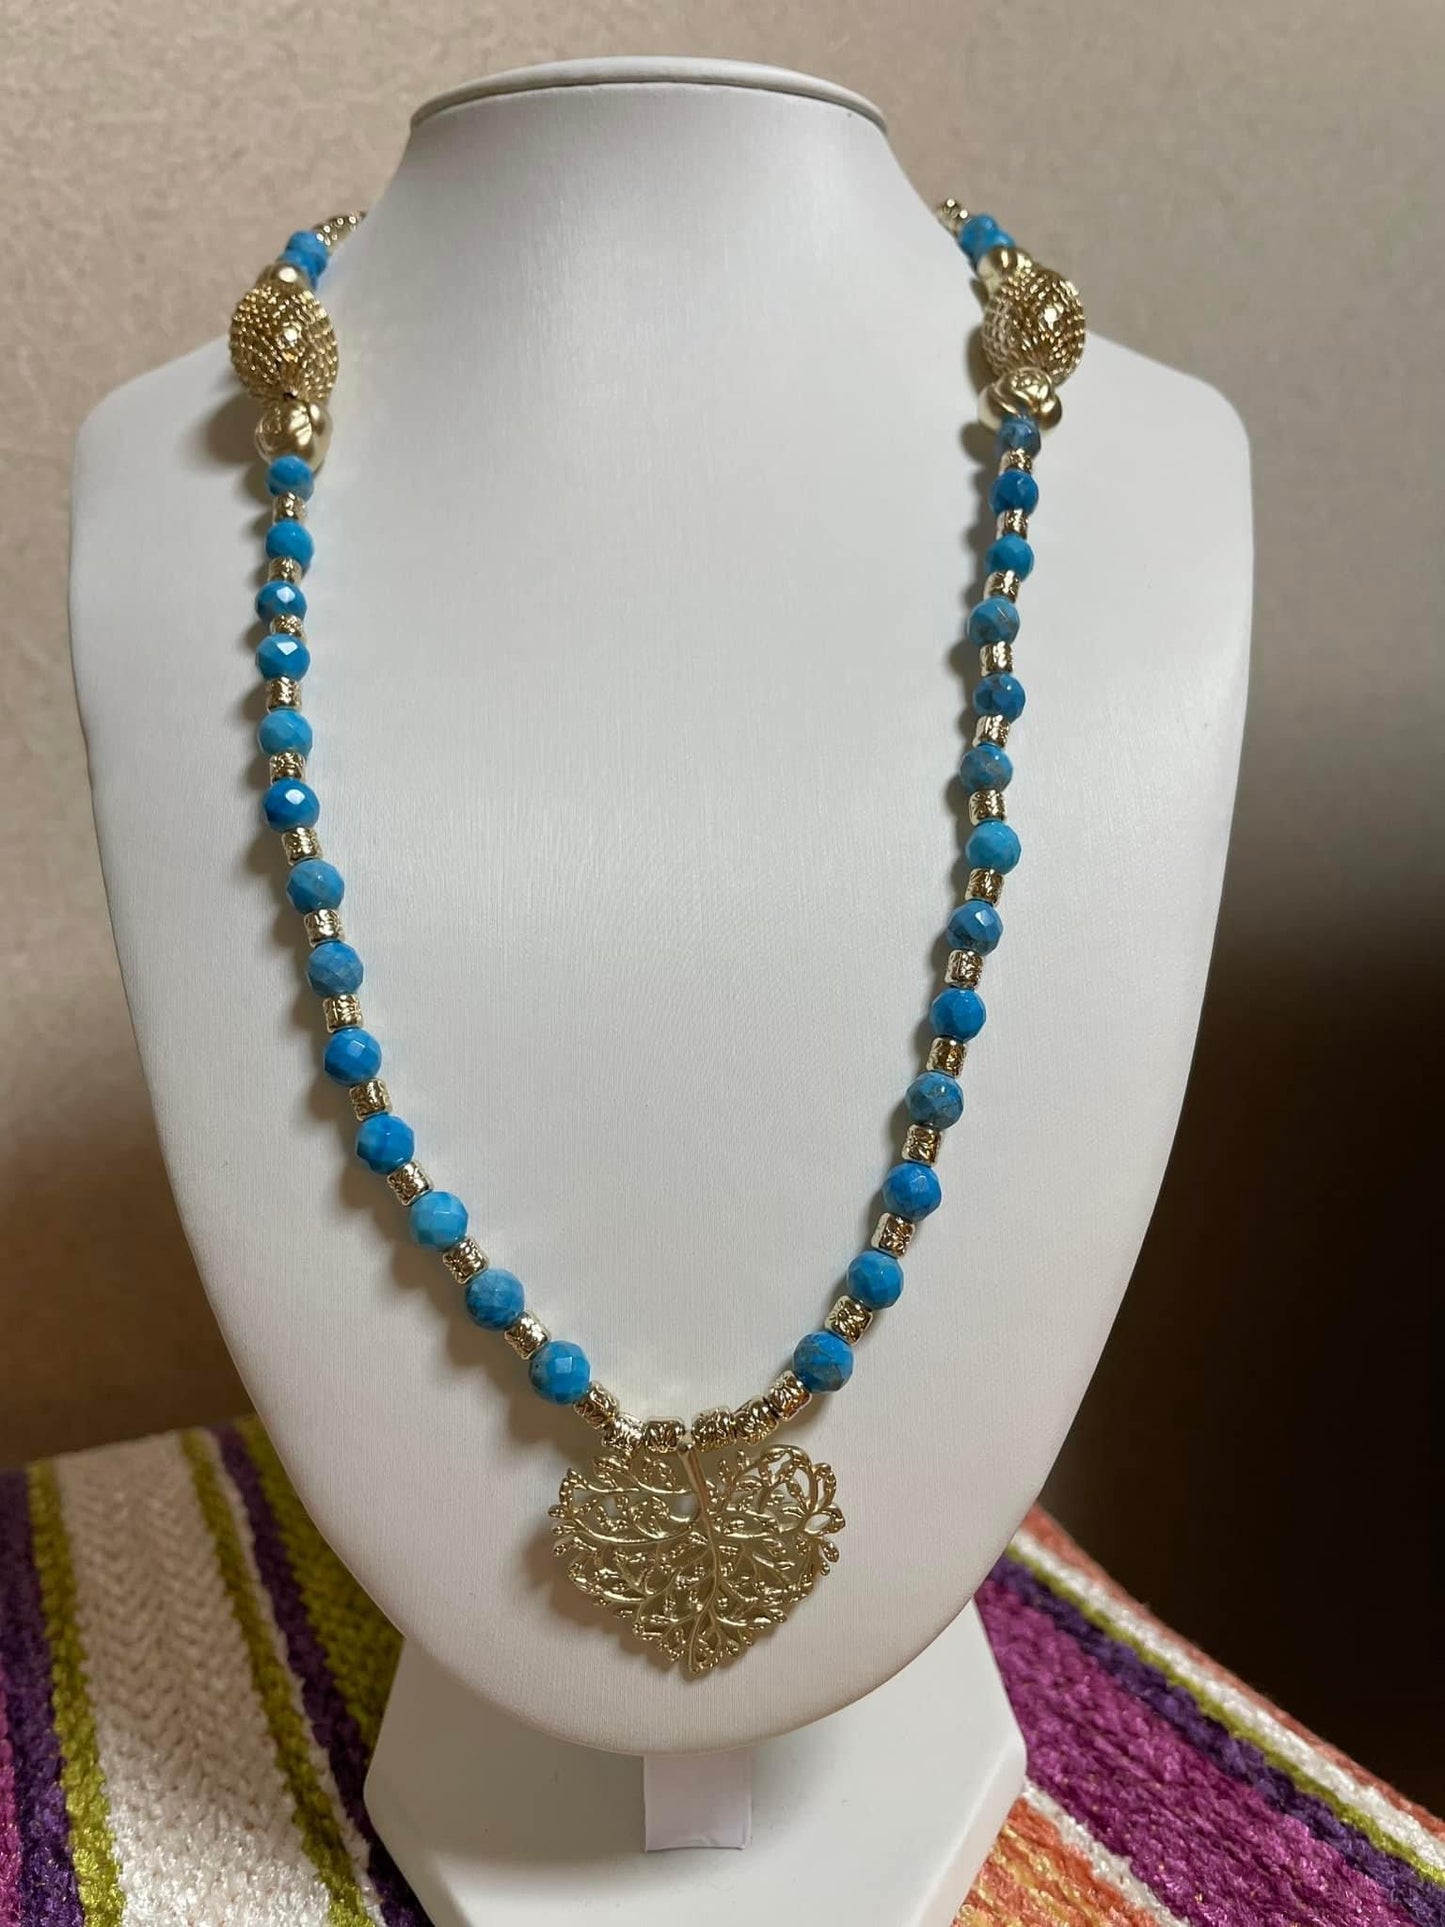 Leaf pendant beads necklace